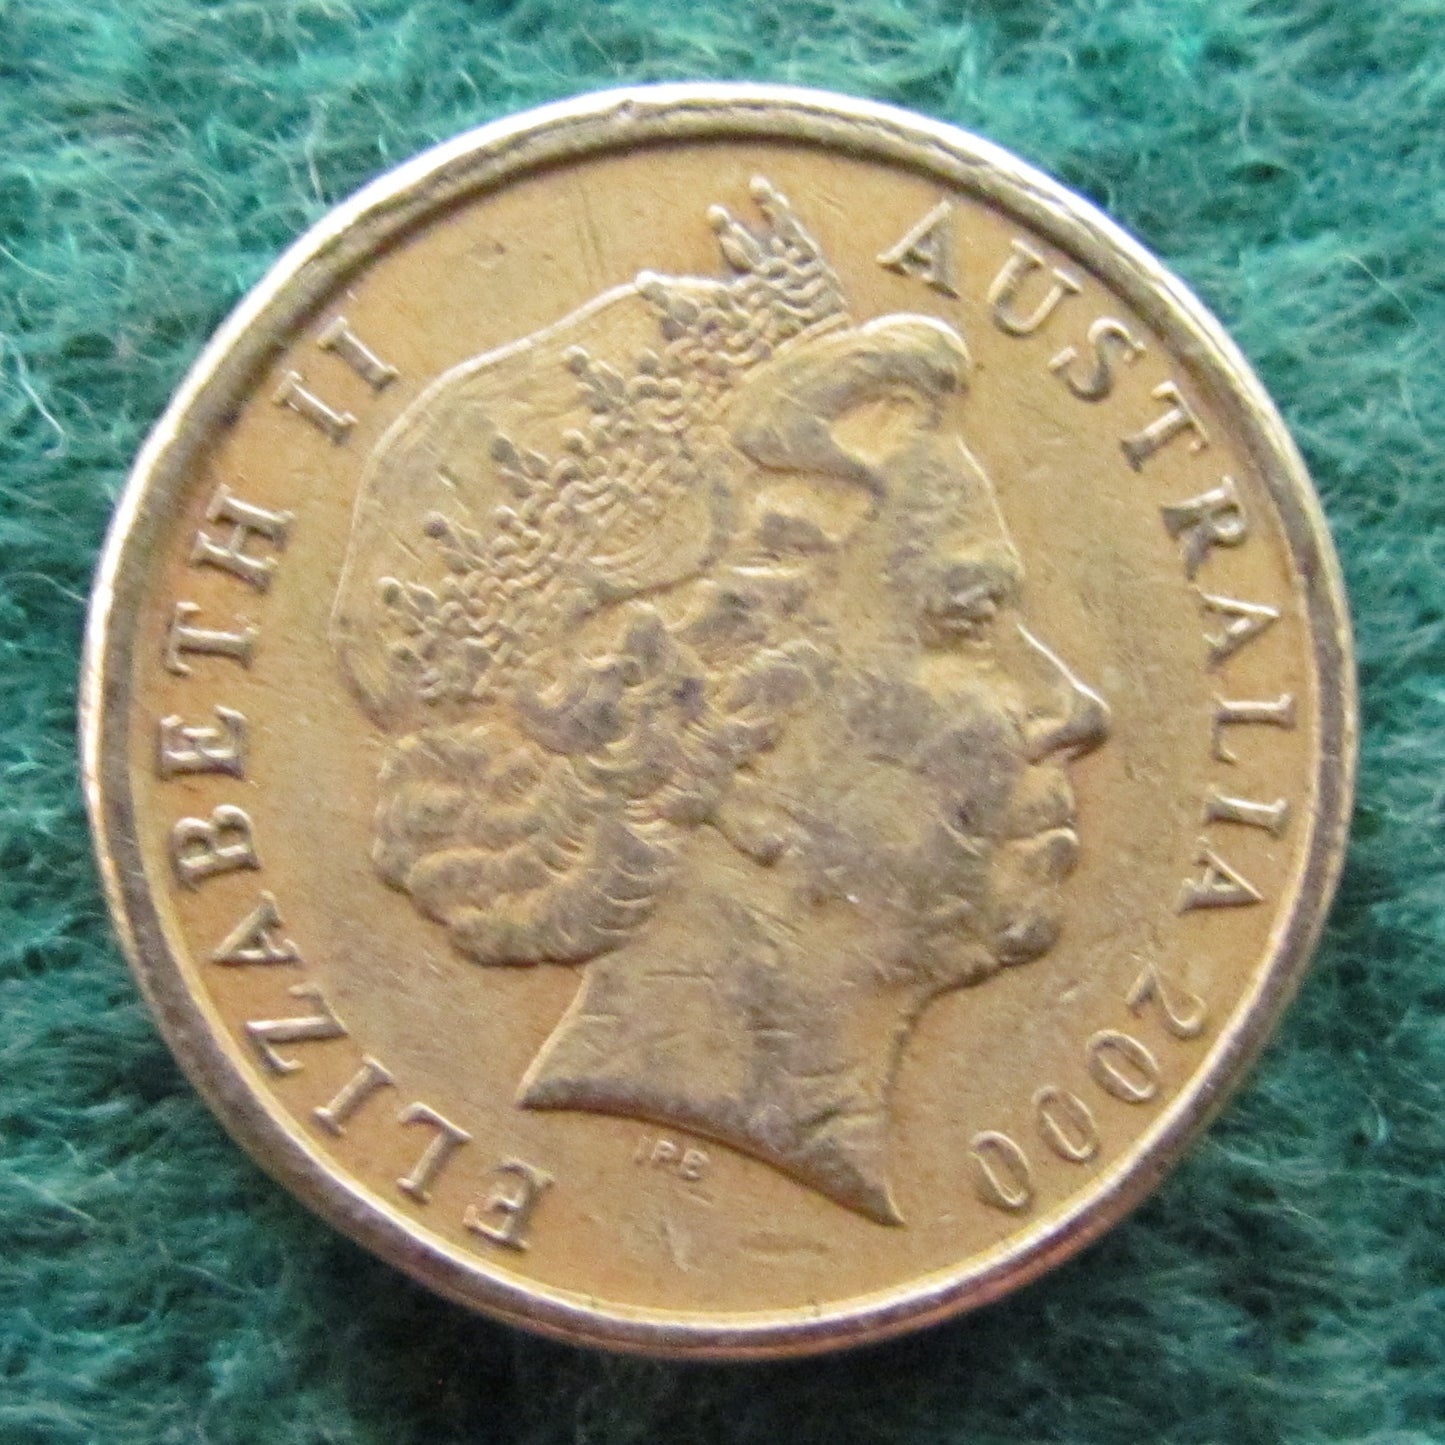 Australian 2000 2 Dollar Aboriginal Elder Queen Elizabeth Coin - Circulated